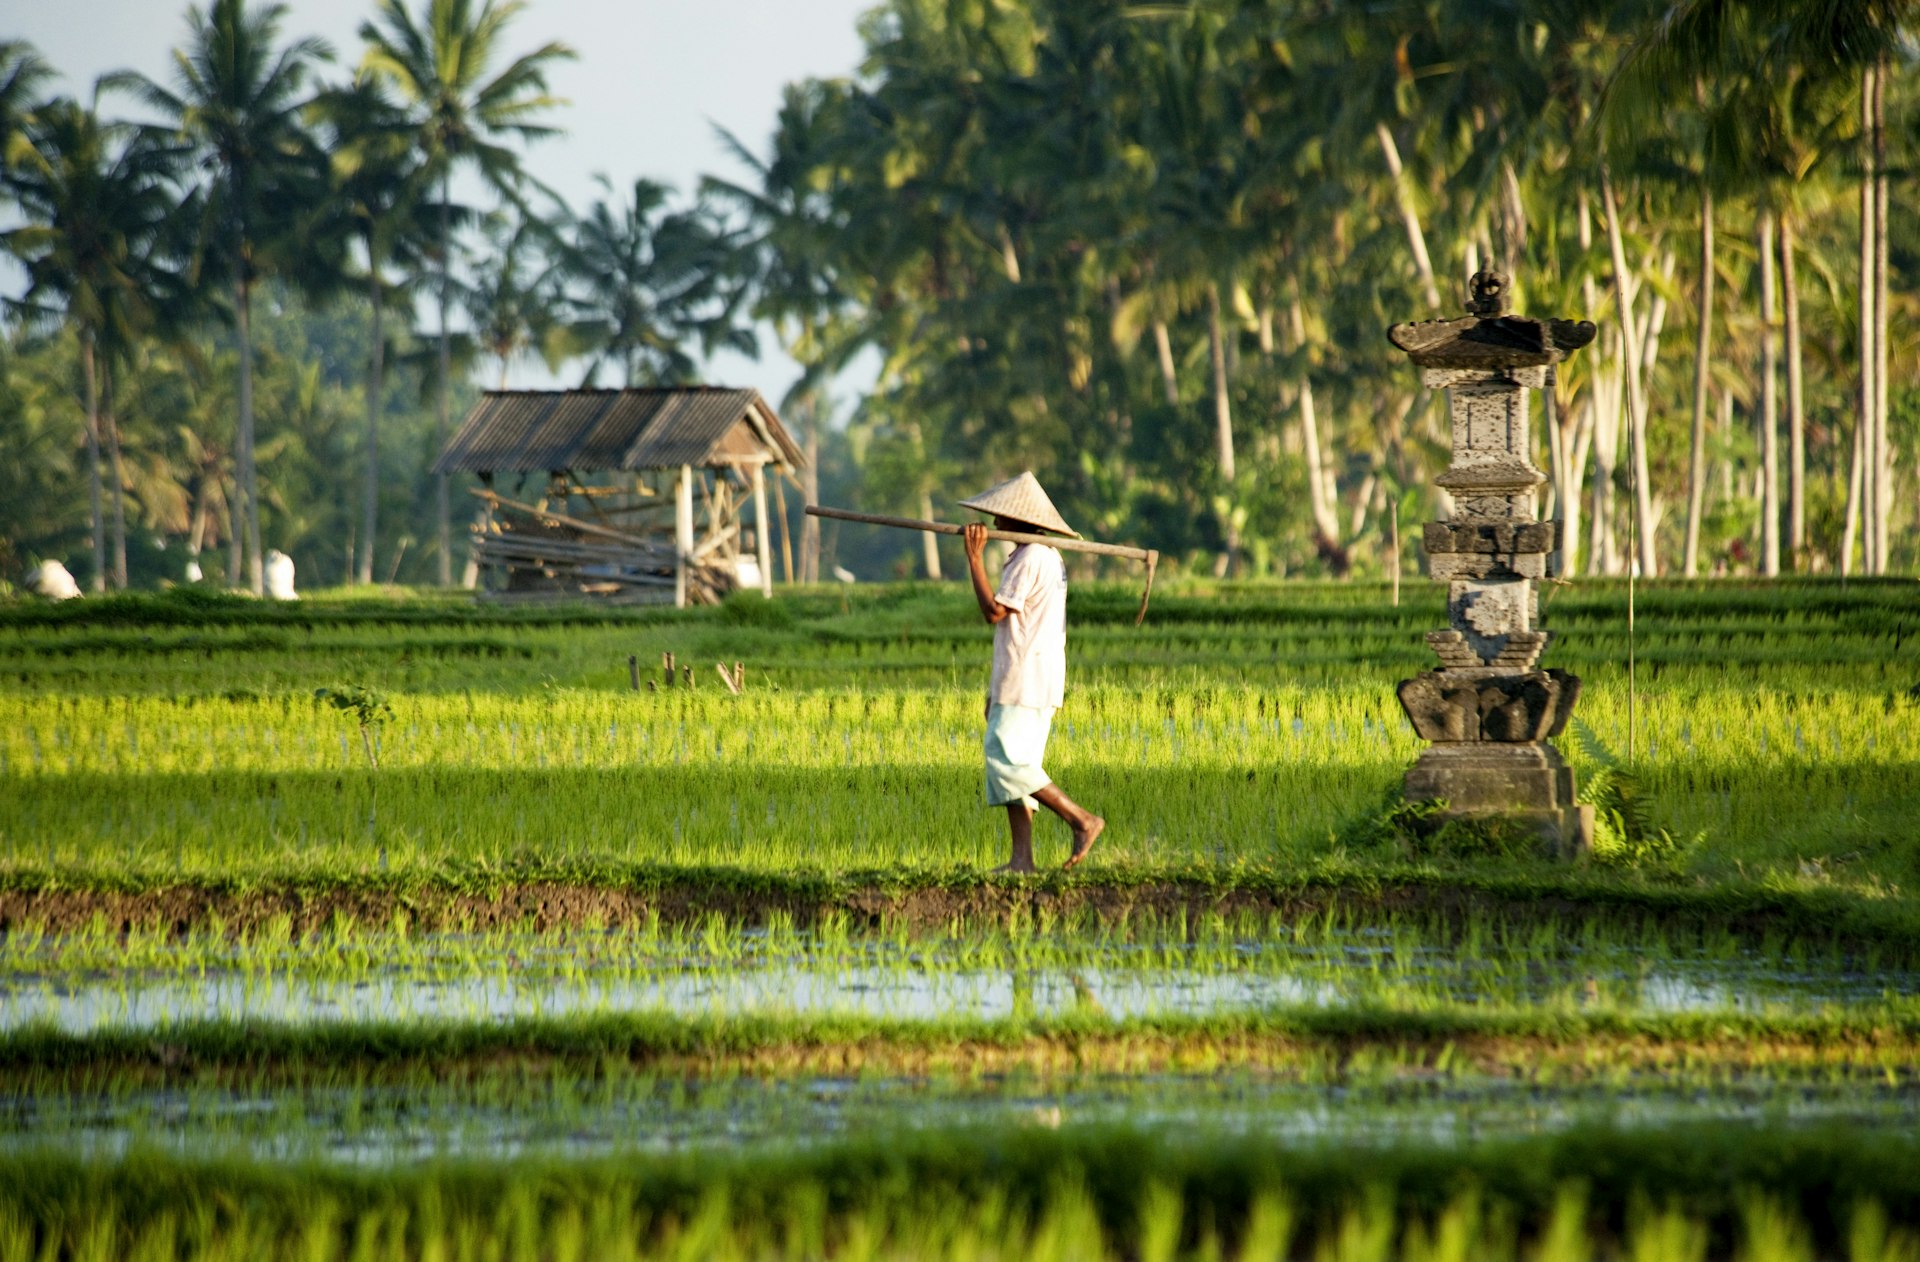 A farmer tends rice paddies near Ubud, Bali 